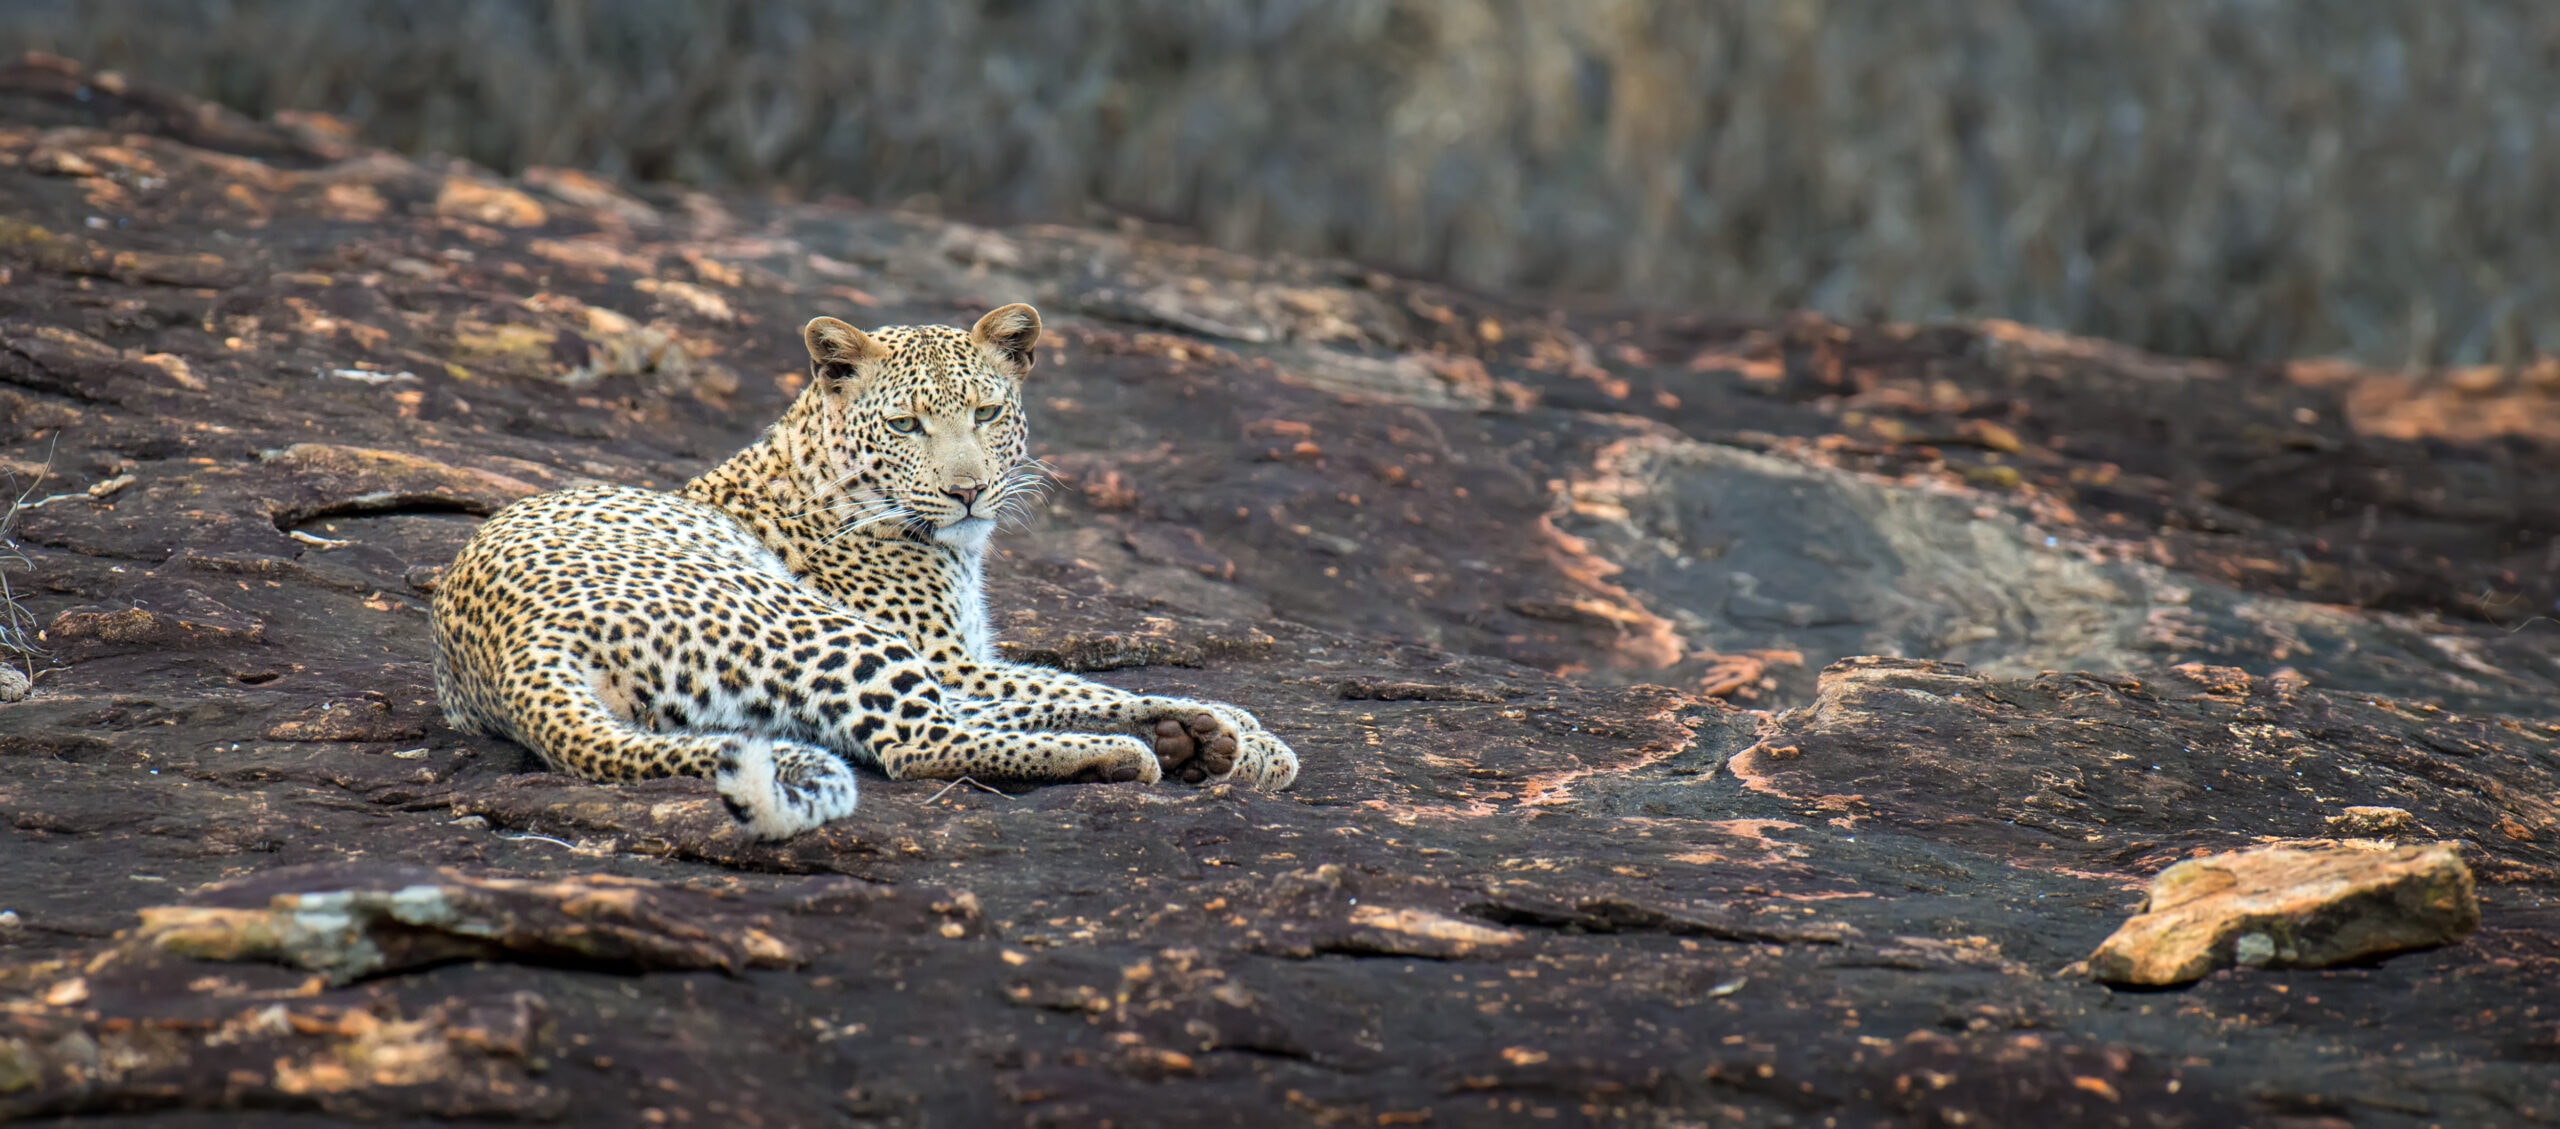 leopard in national park of kenya 2021 08 26 15 56 05 utc scaled